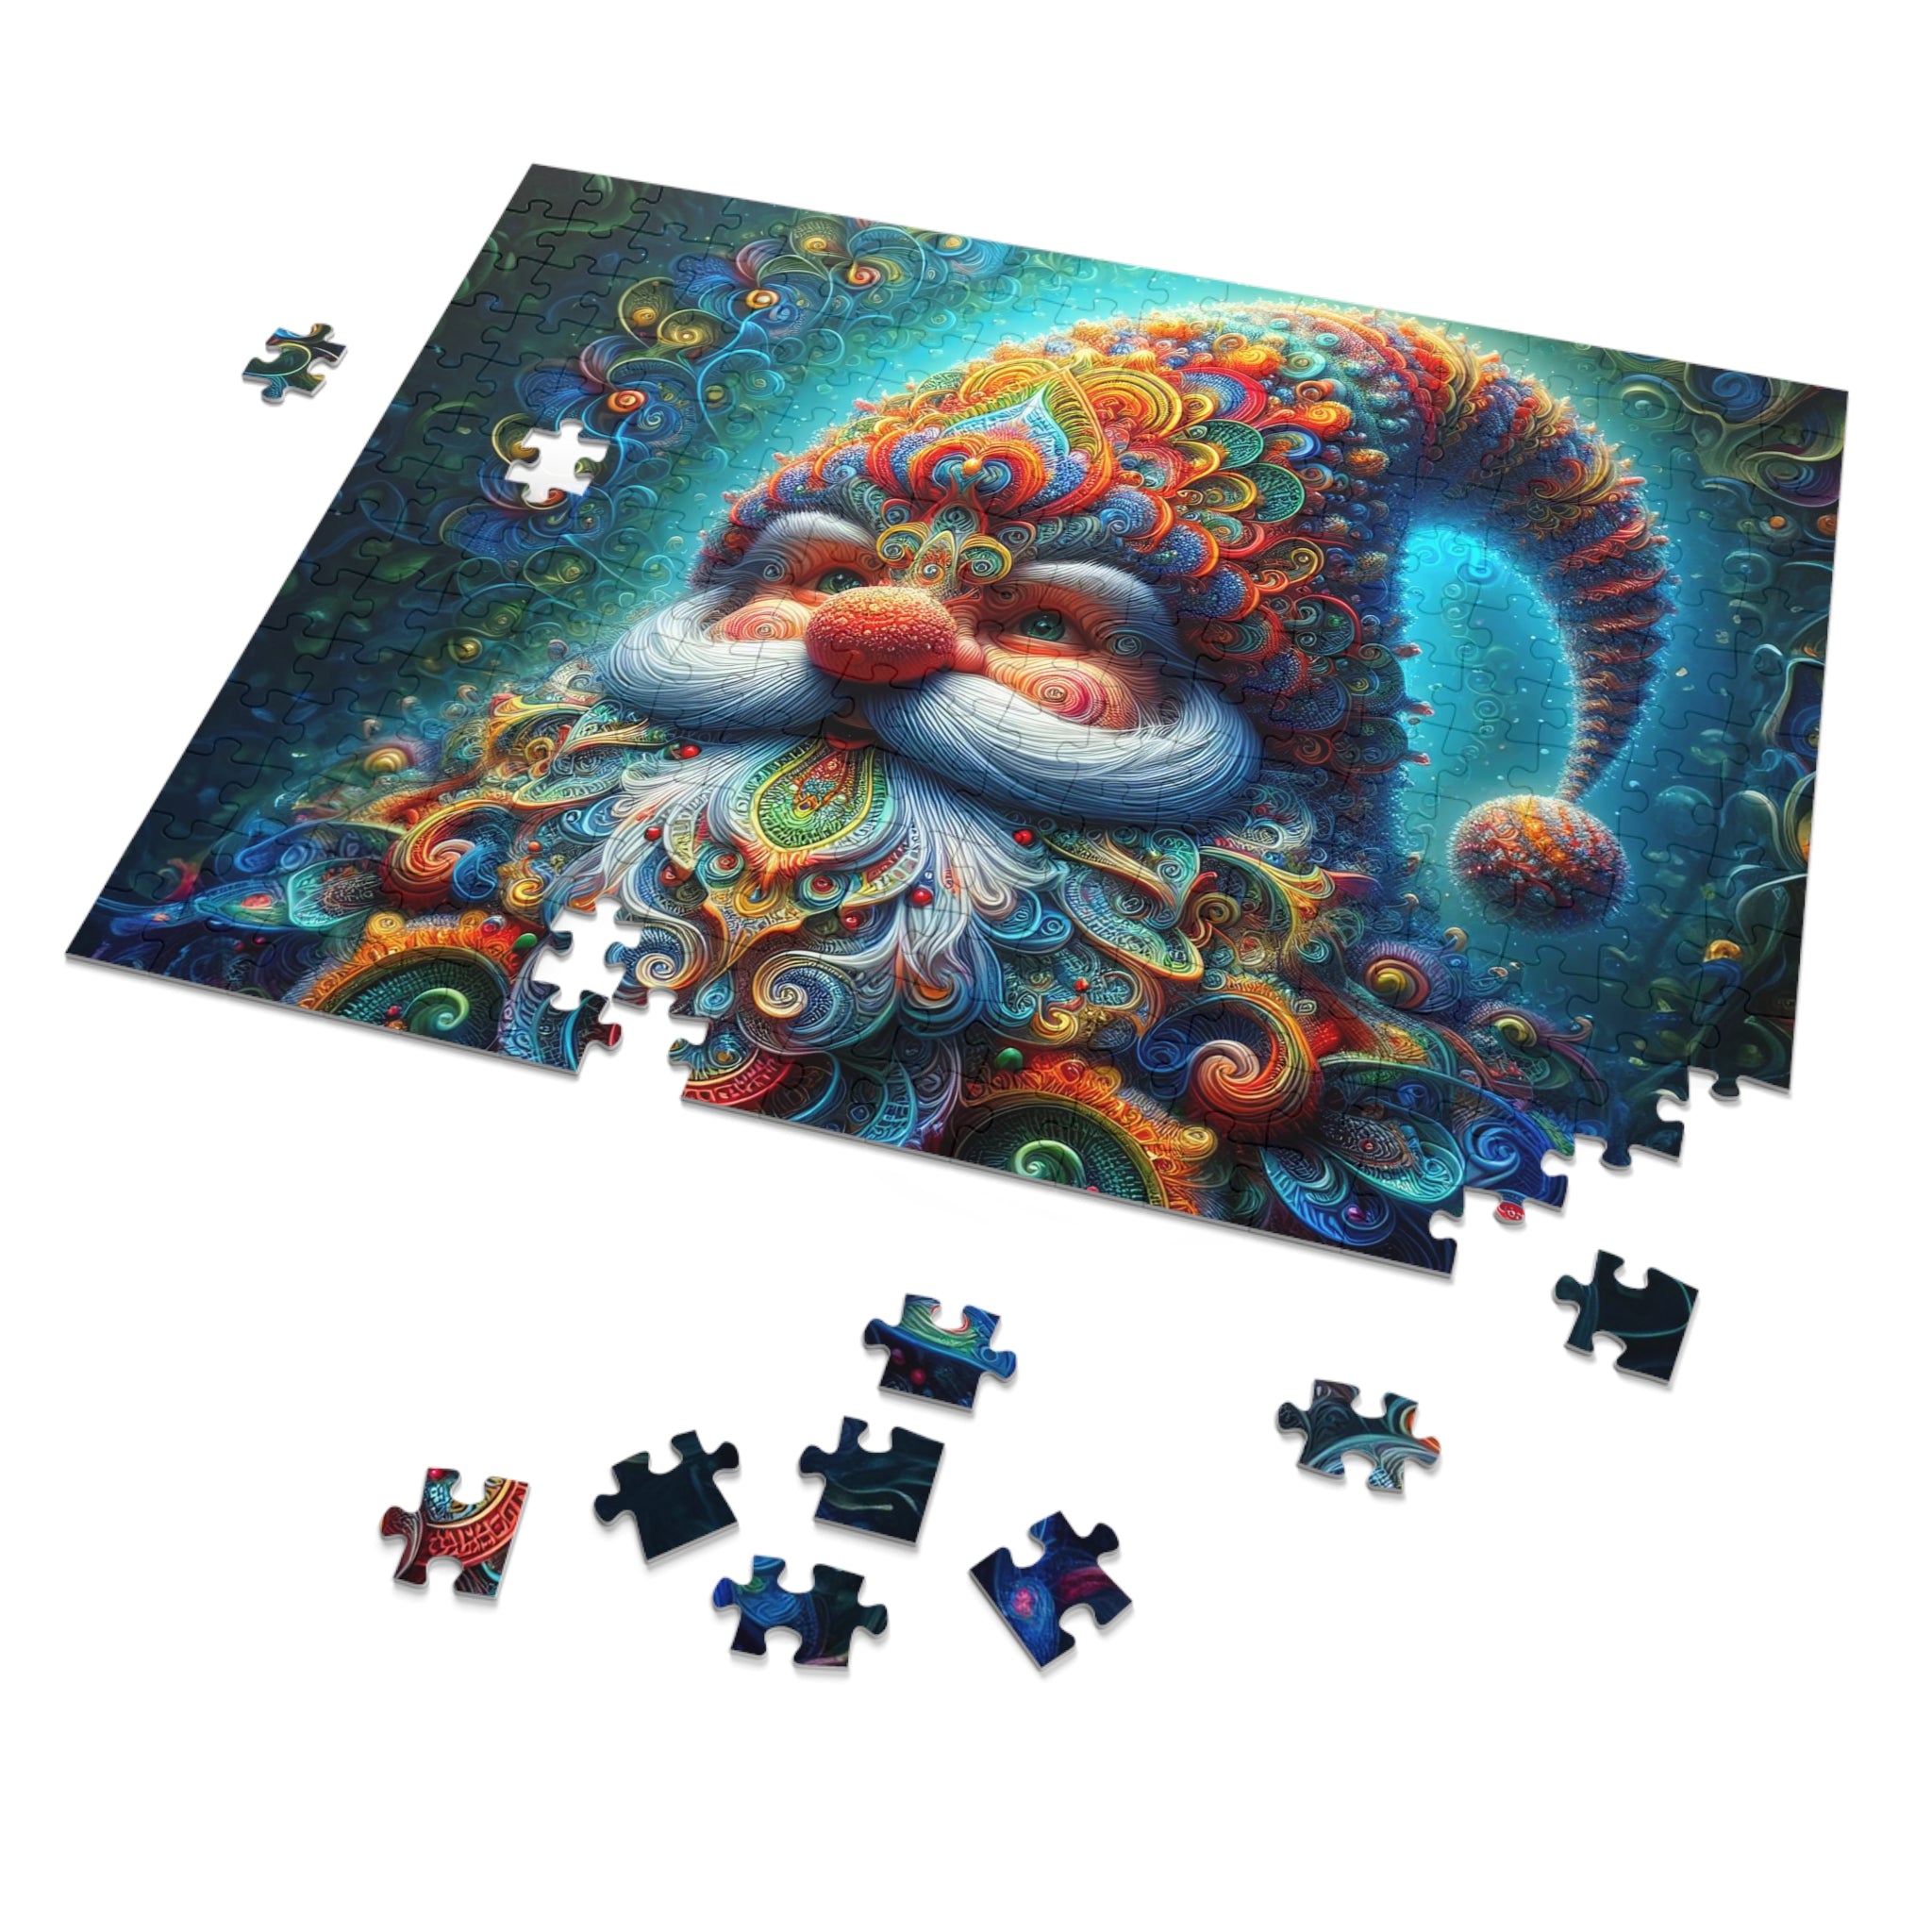 The Yuletide Dreamweaver Jigsaw Puzzle